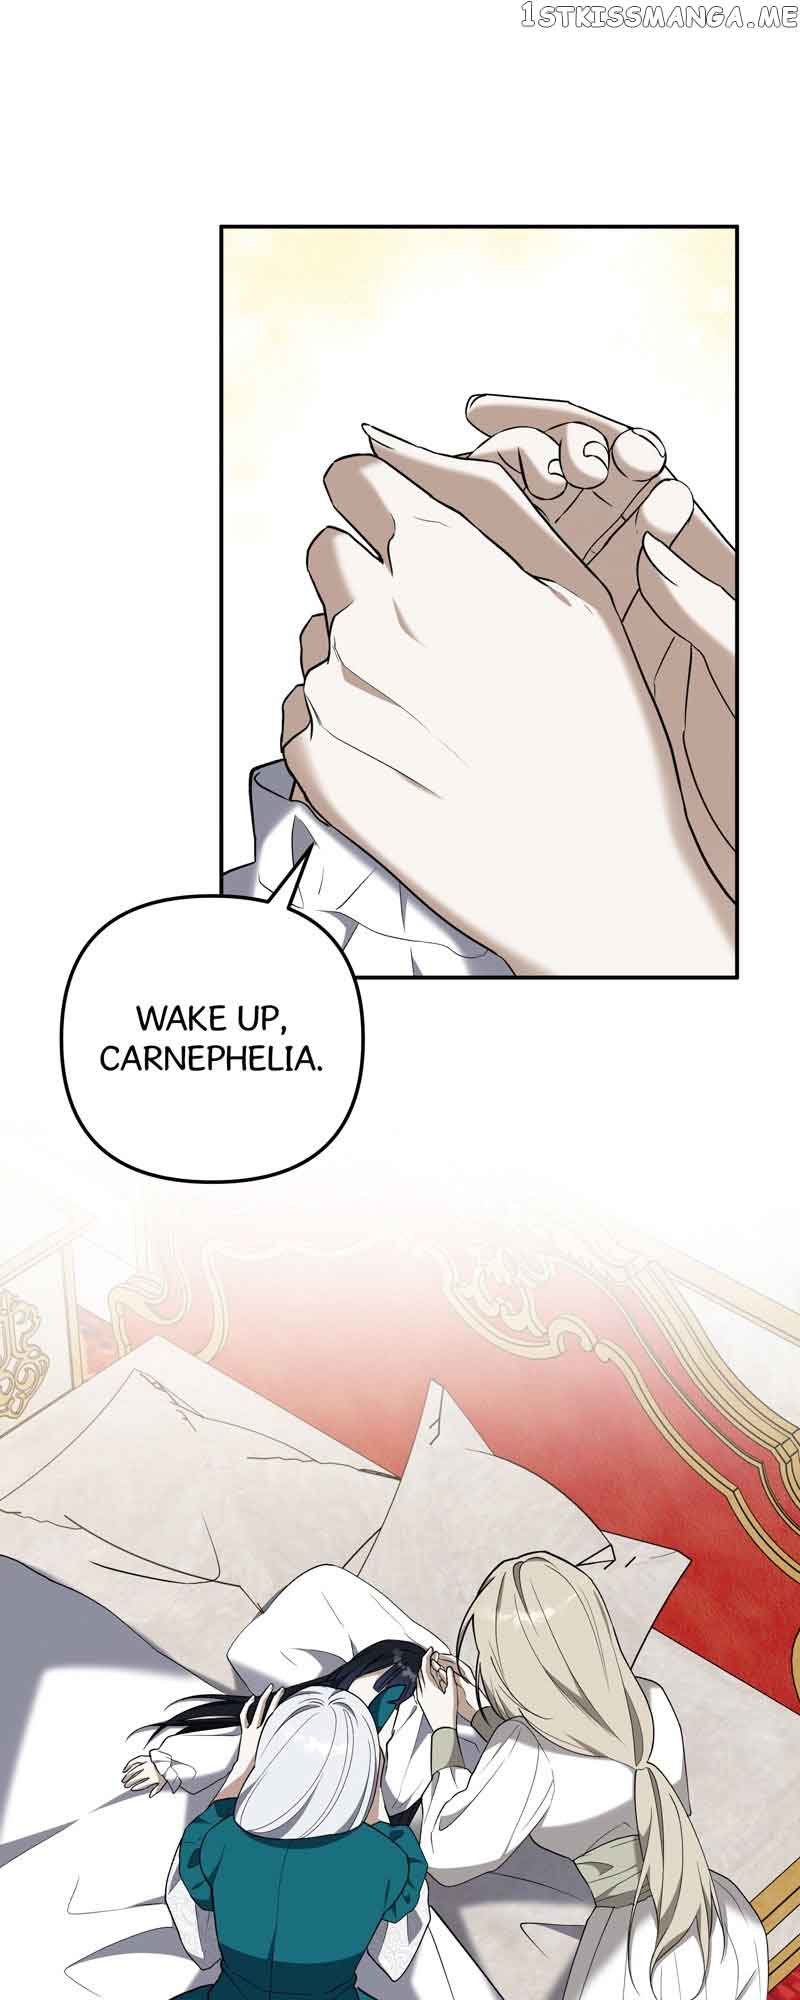 Carnephelia’s Curse is Never Ending chapter 21